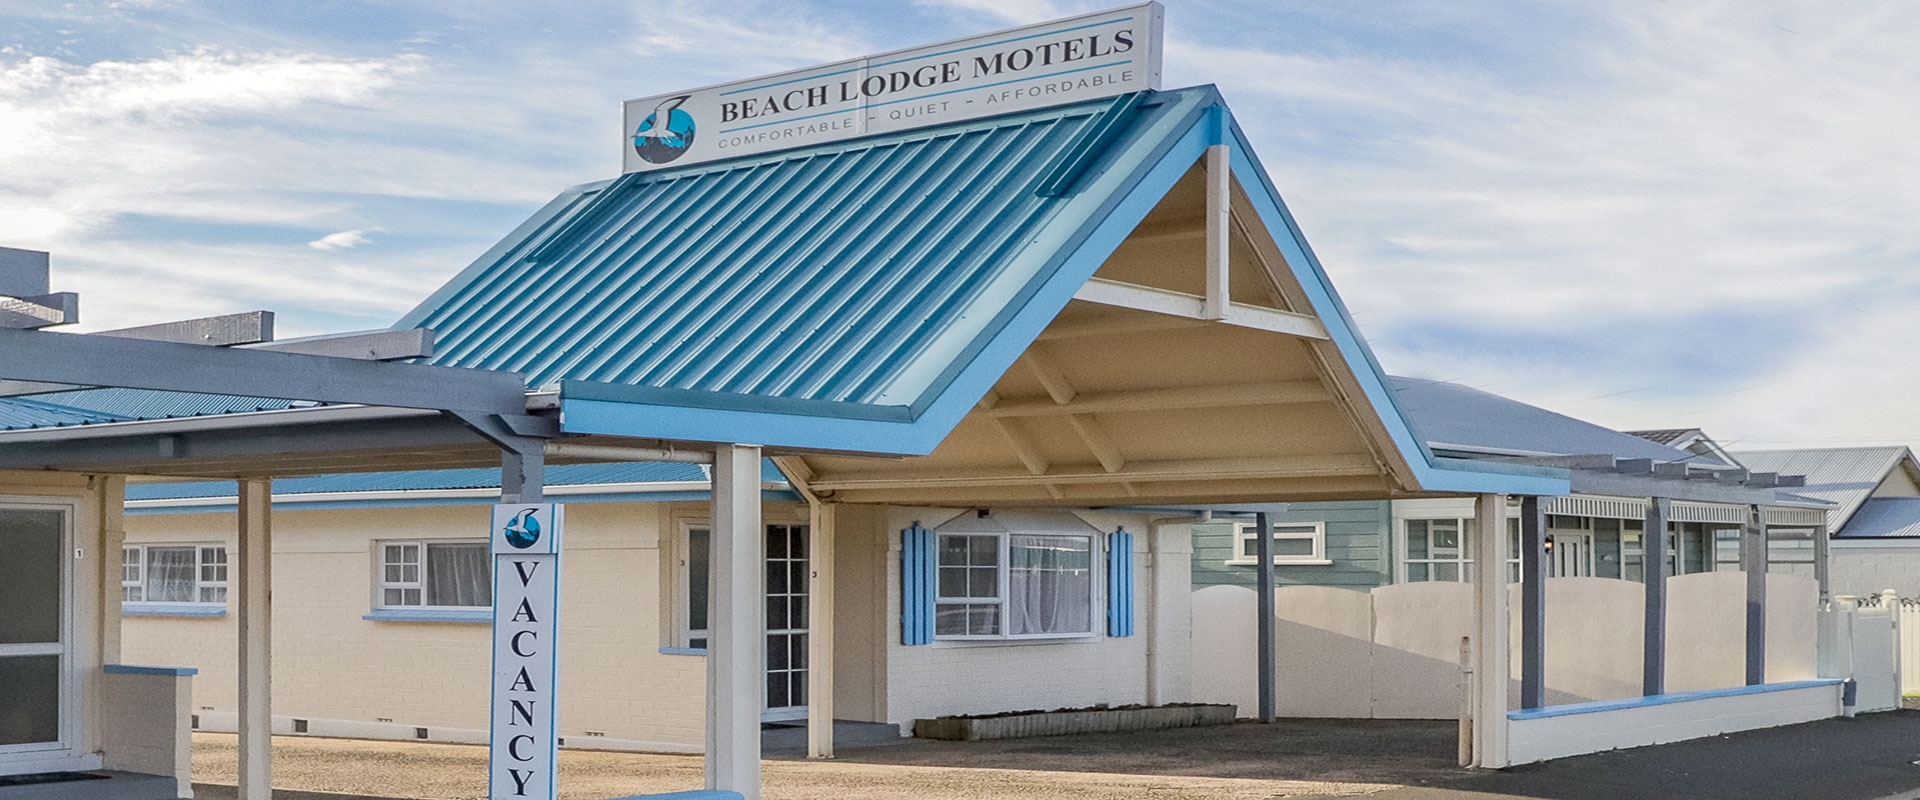 beach lodge motels